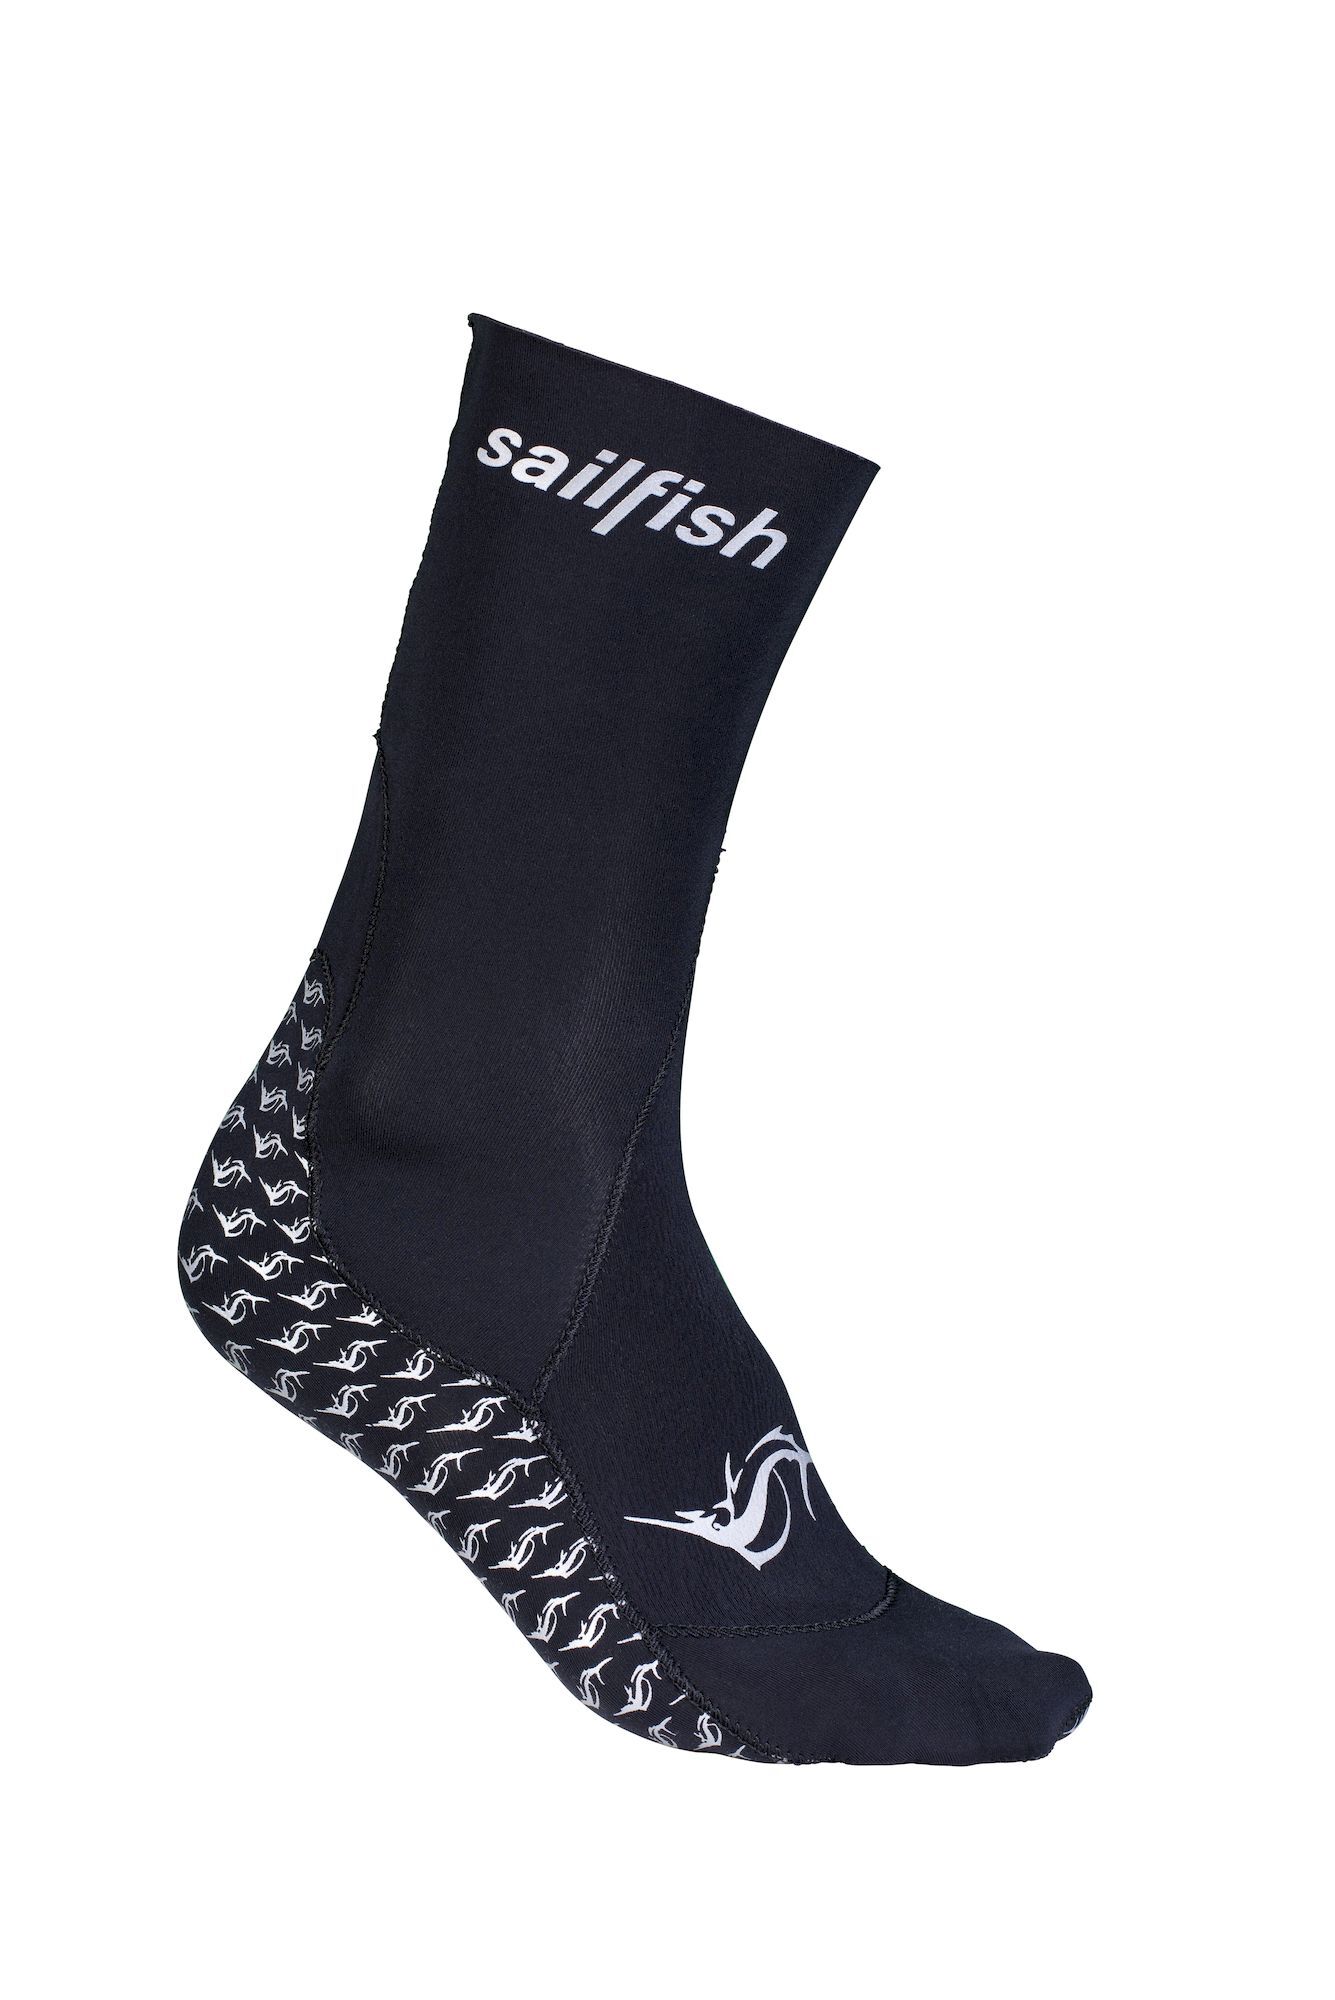 Sailfish Neoprene Socks - Chaussons néoprène | Hardloop